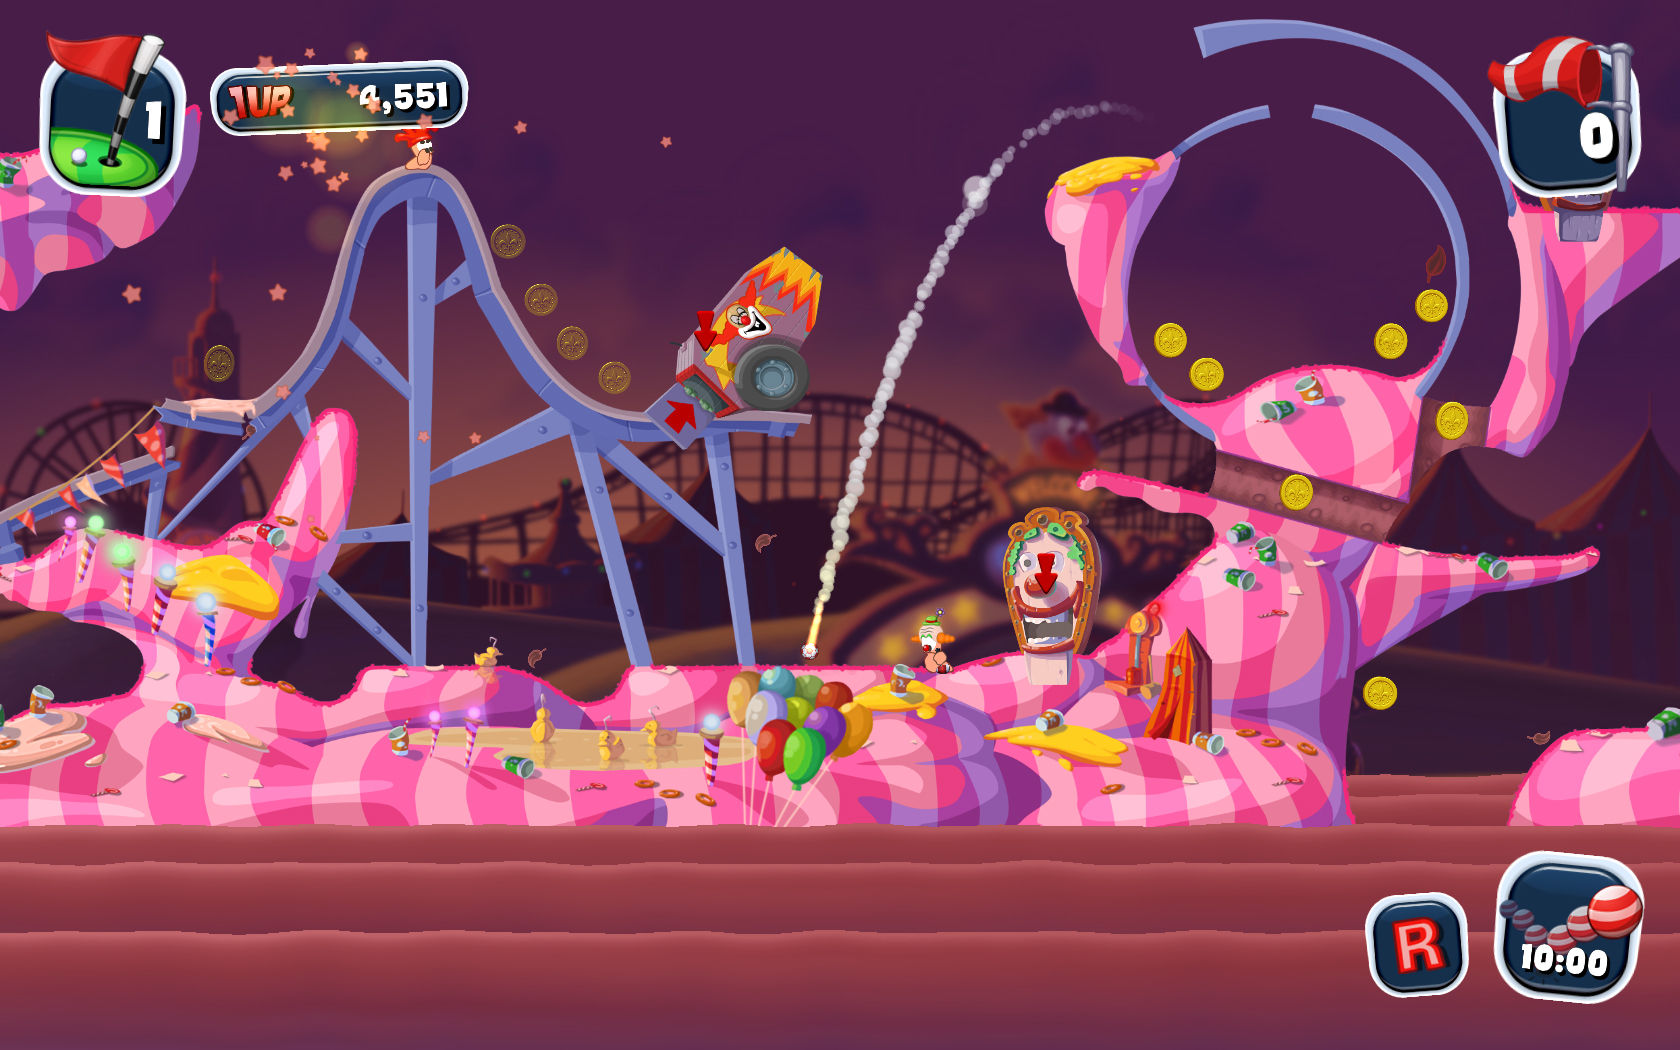 Worms Crazy Golf + Carnival Course DLC Bundle Steam CD Key